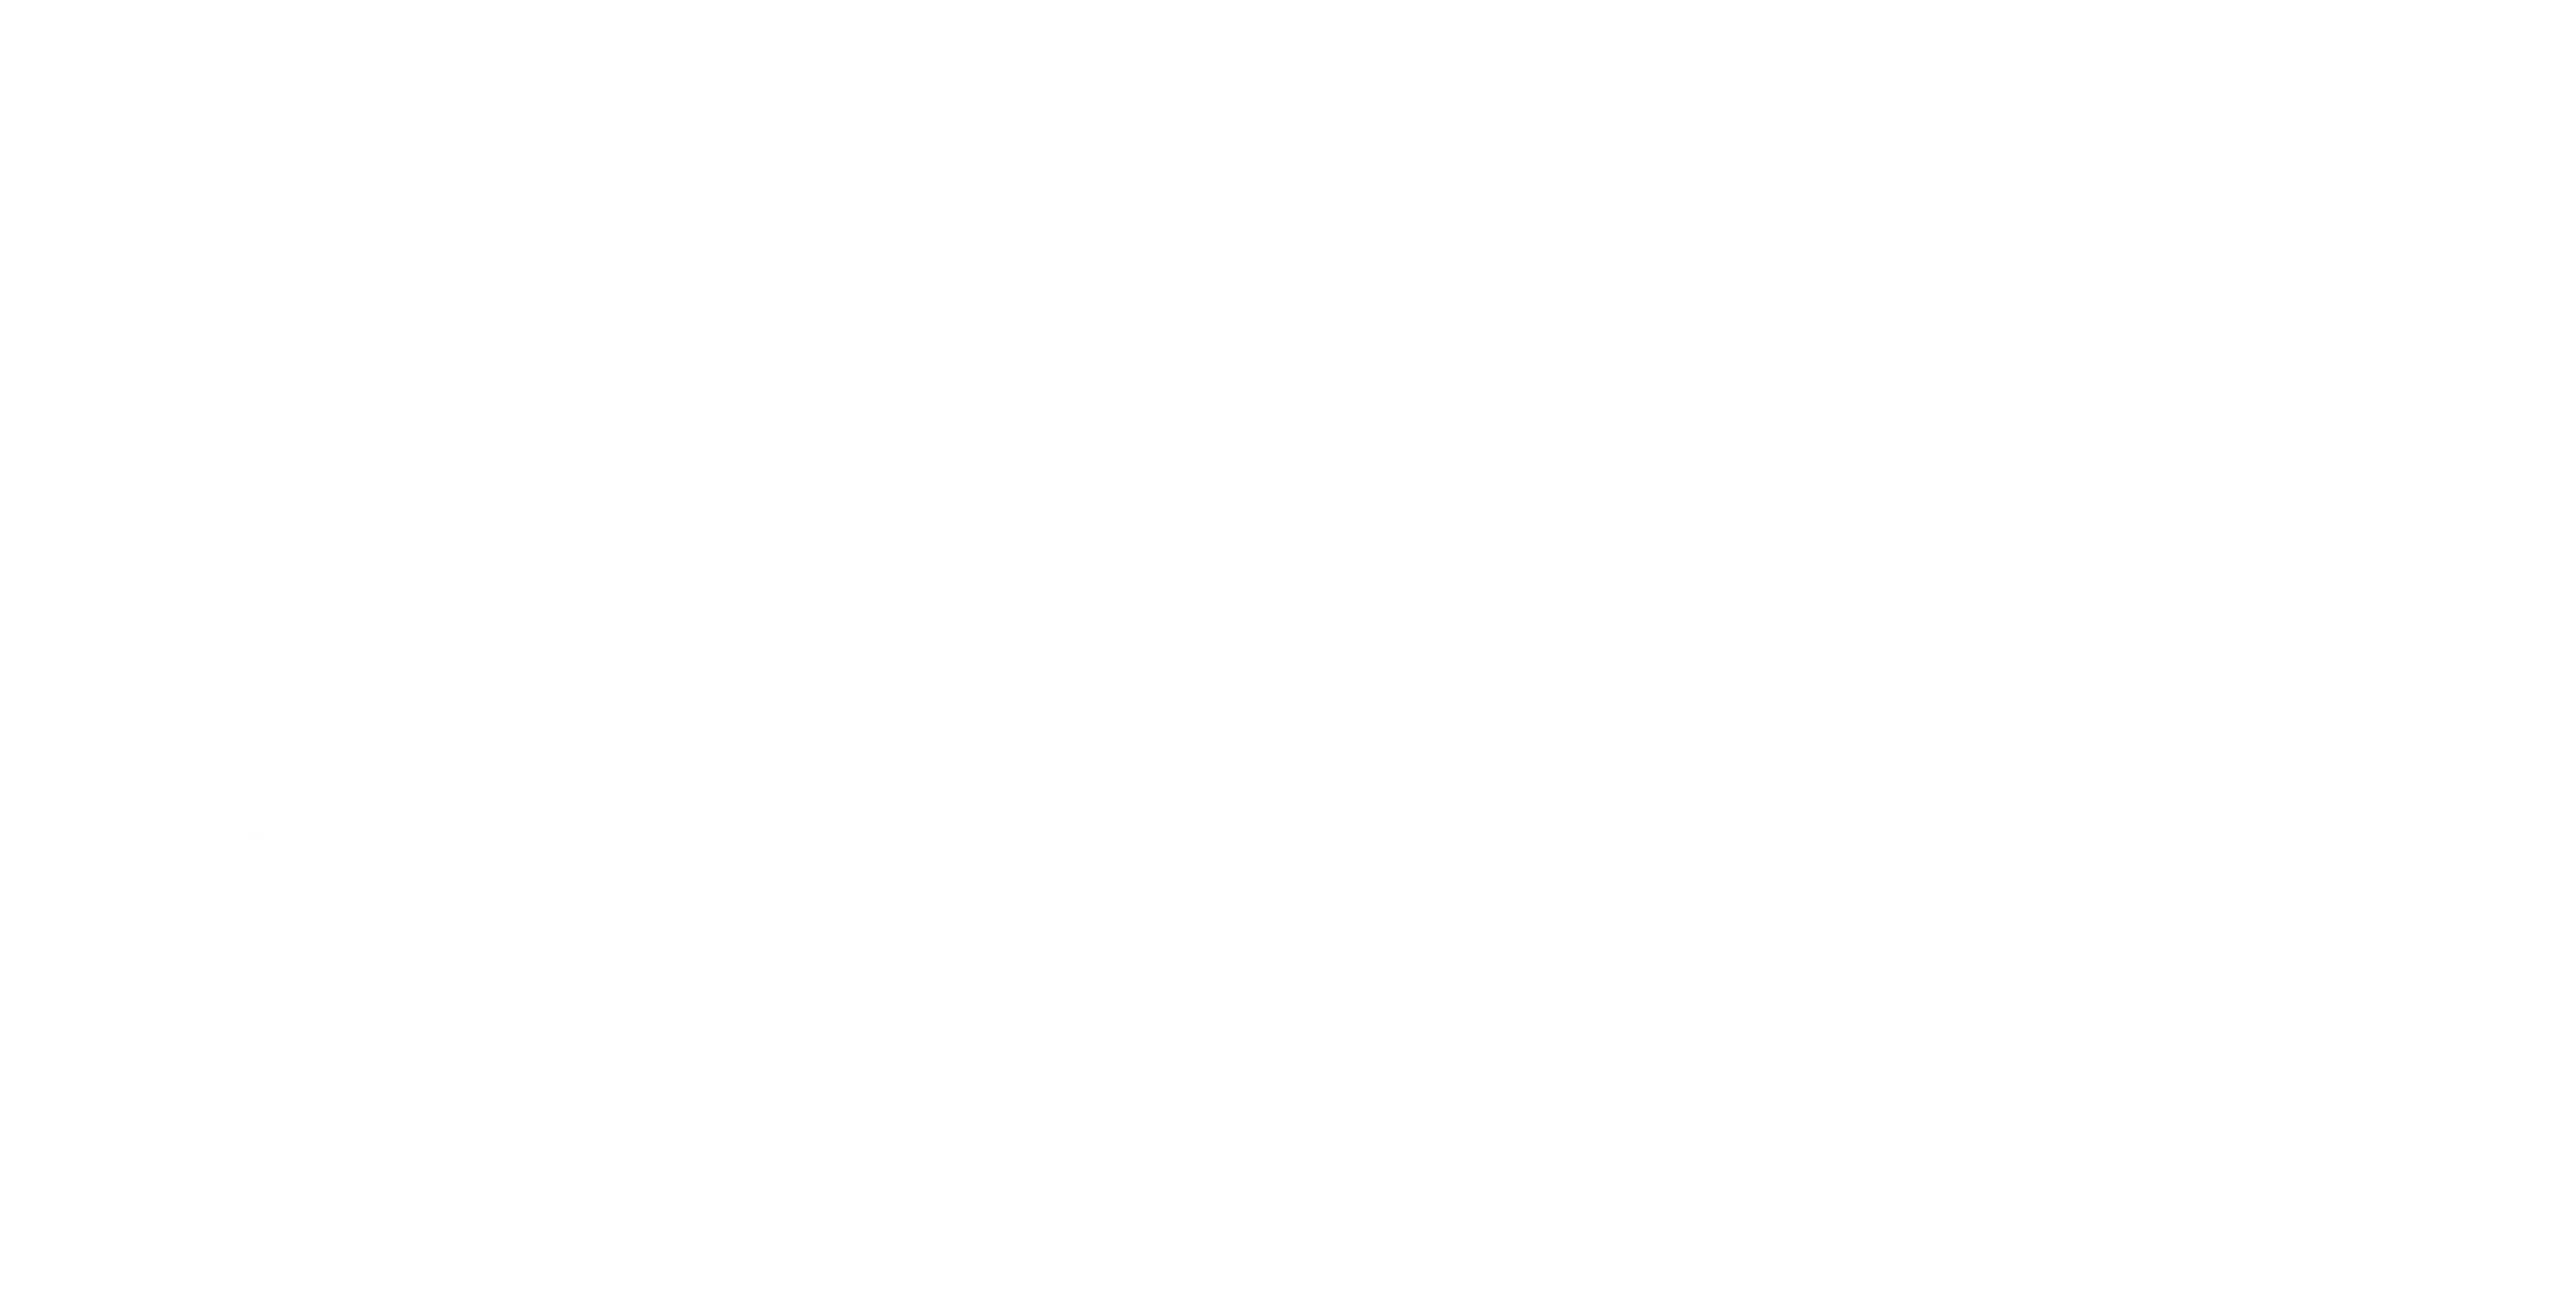 VIT Bhopal  - Best University in Central India -  logo